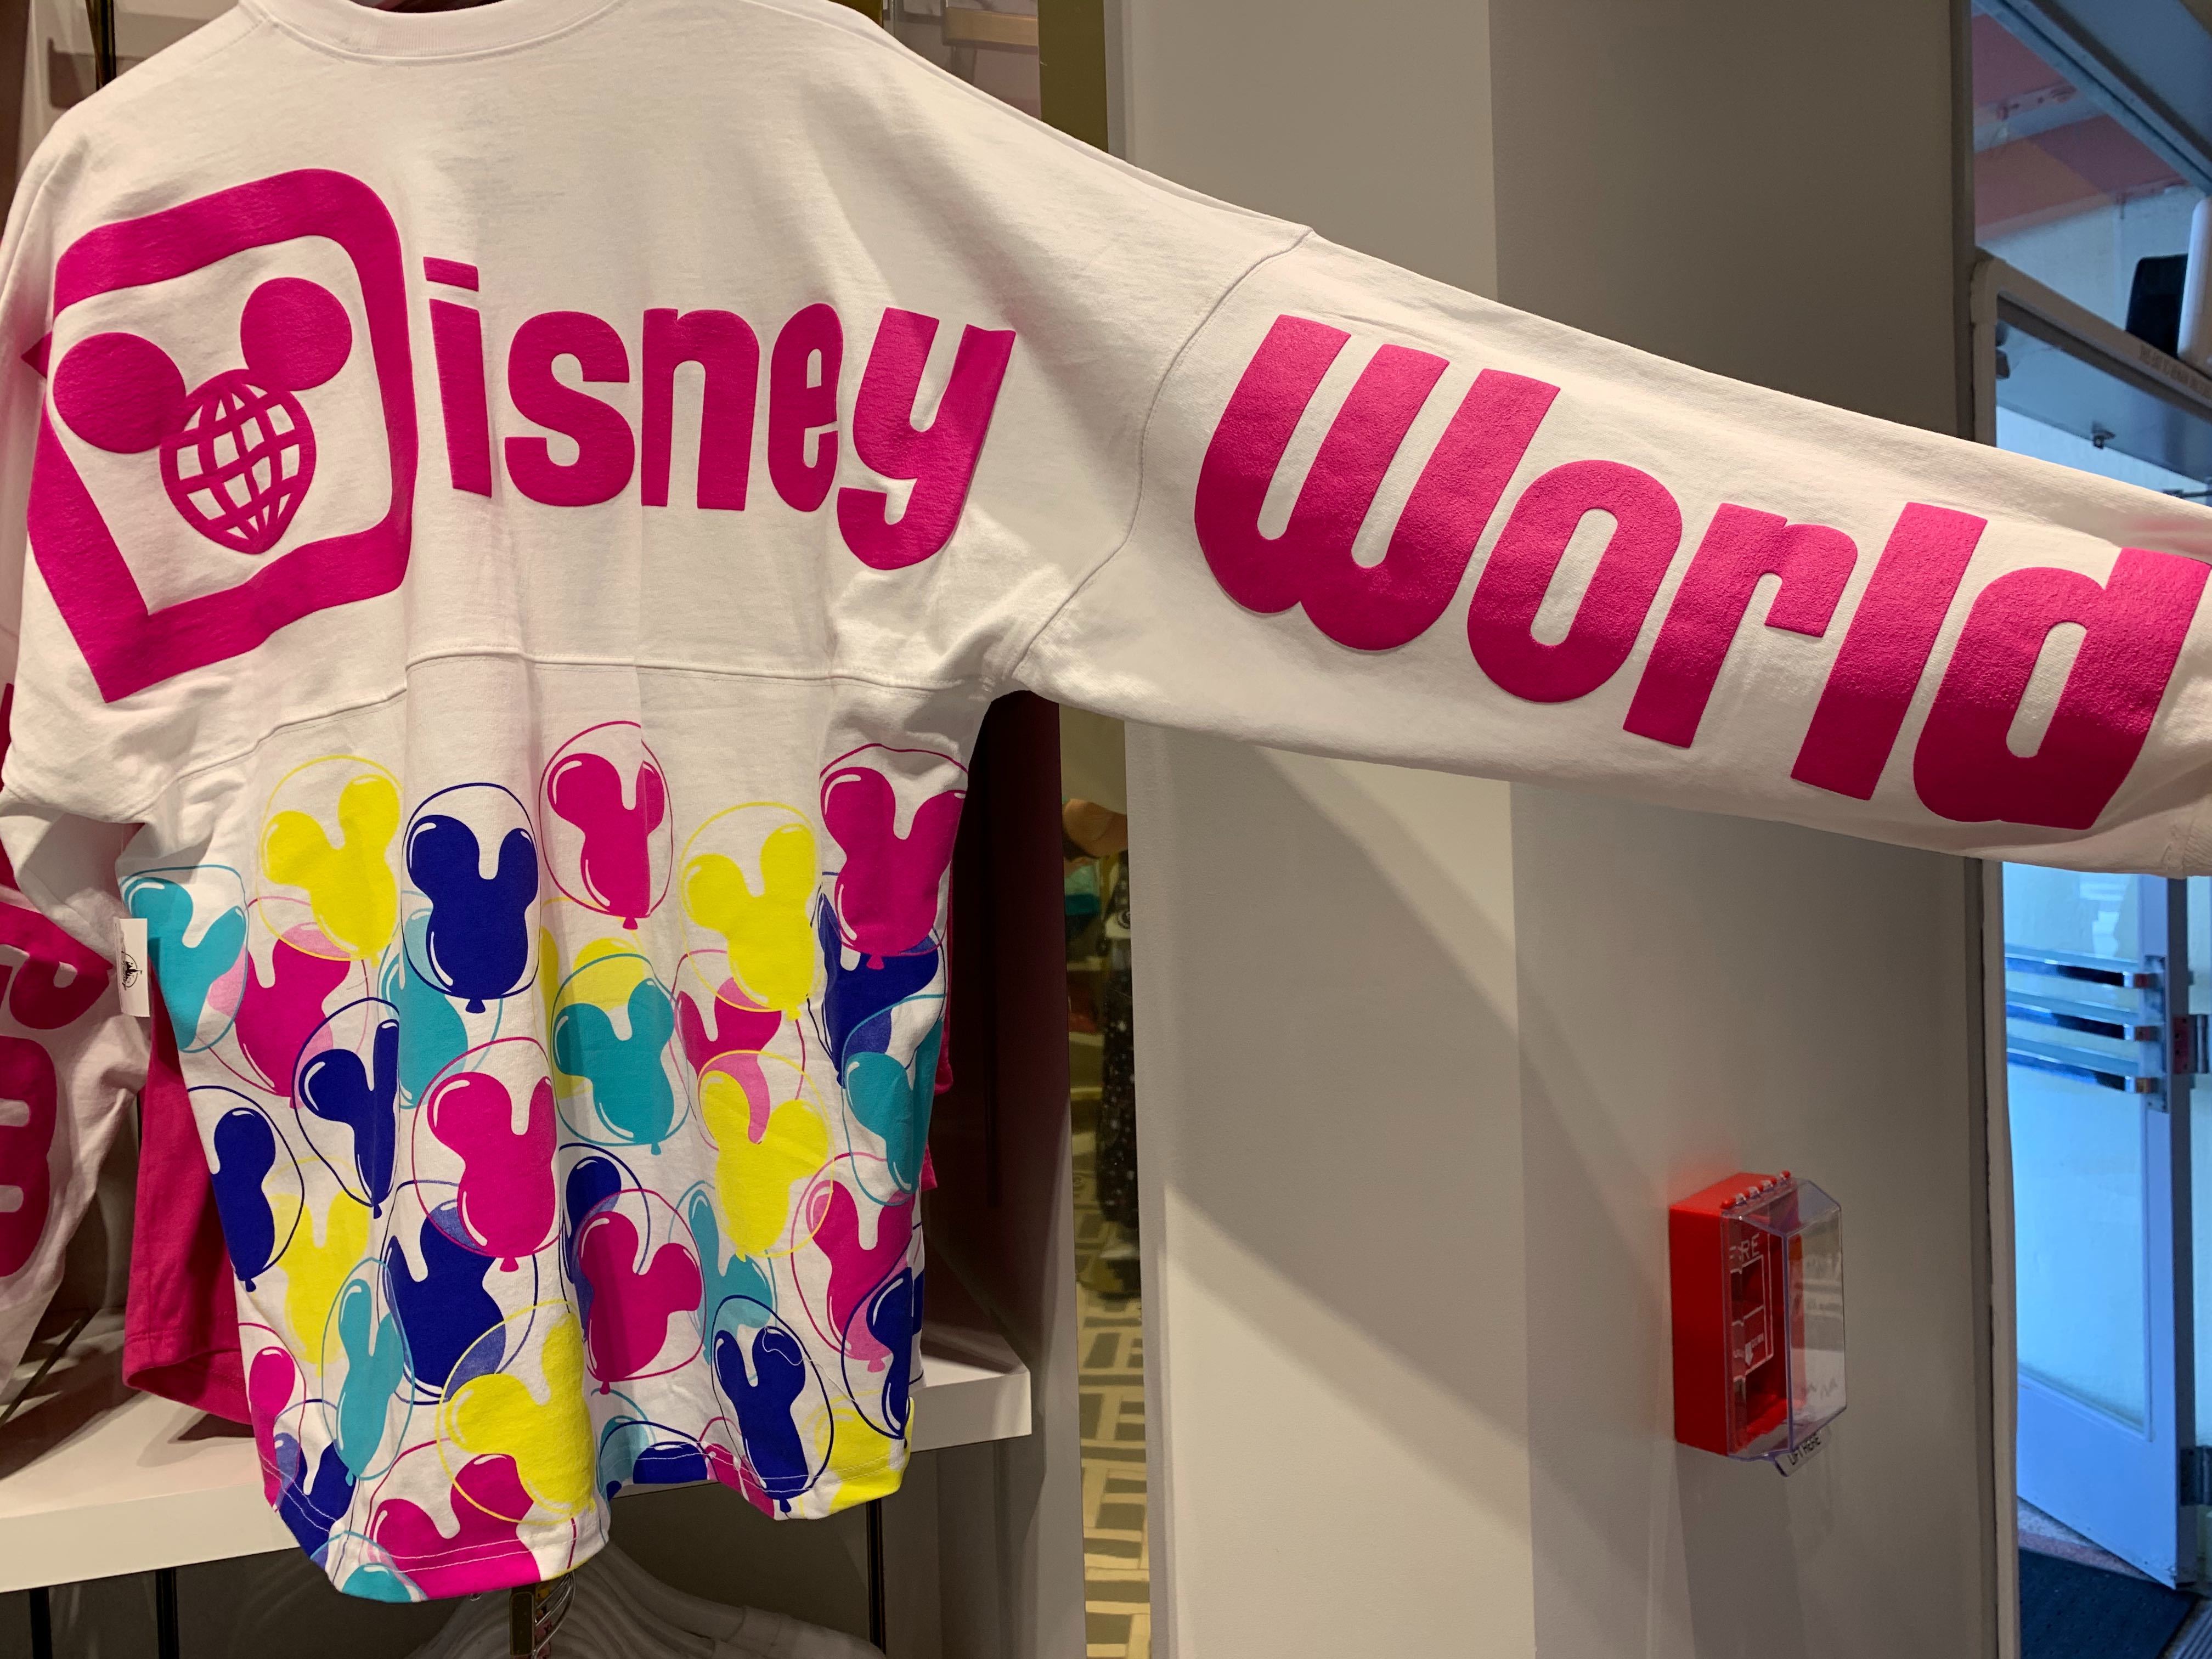 PHOTOS New Mickey Mouse Balloon Spirit Jersey Floats Into Walt Disney